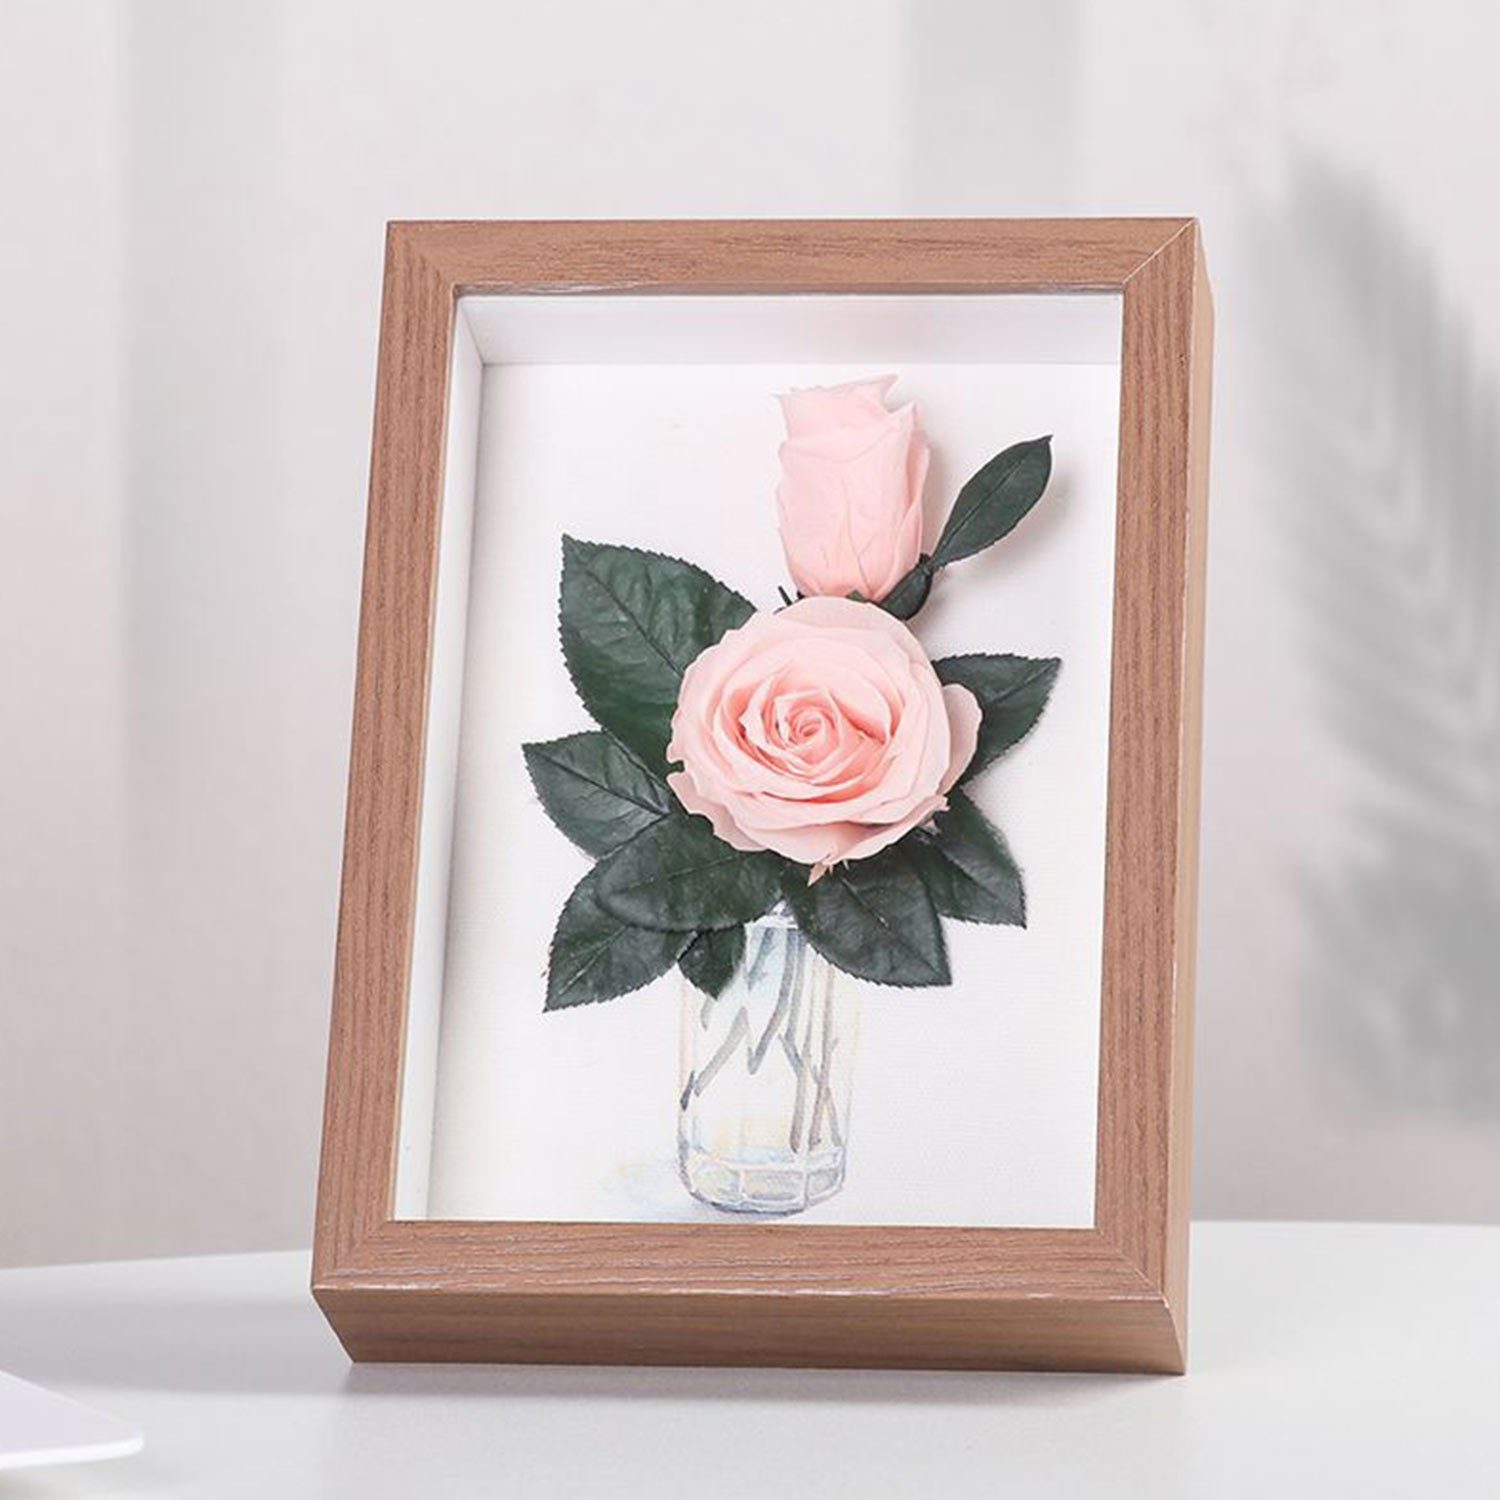 Kunstblume Ewige handgemachte konservierte Rose, MAGICSHE, zum Befüllen Quadratische Form Rosa